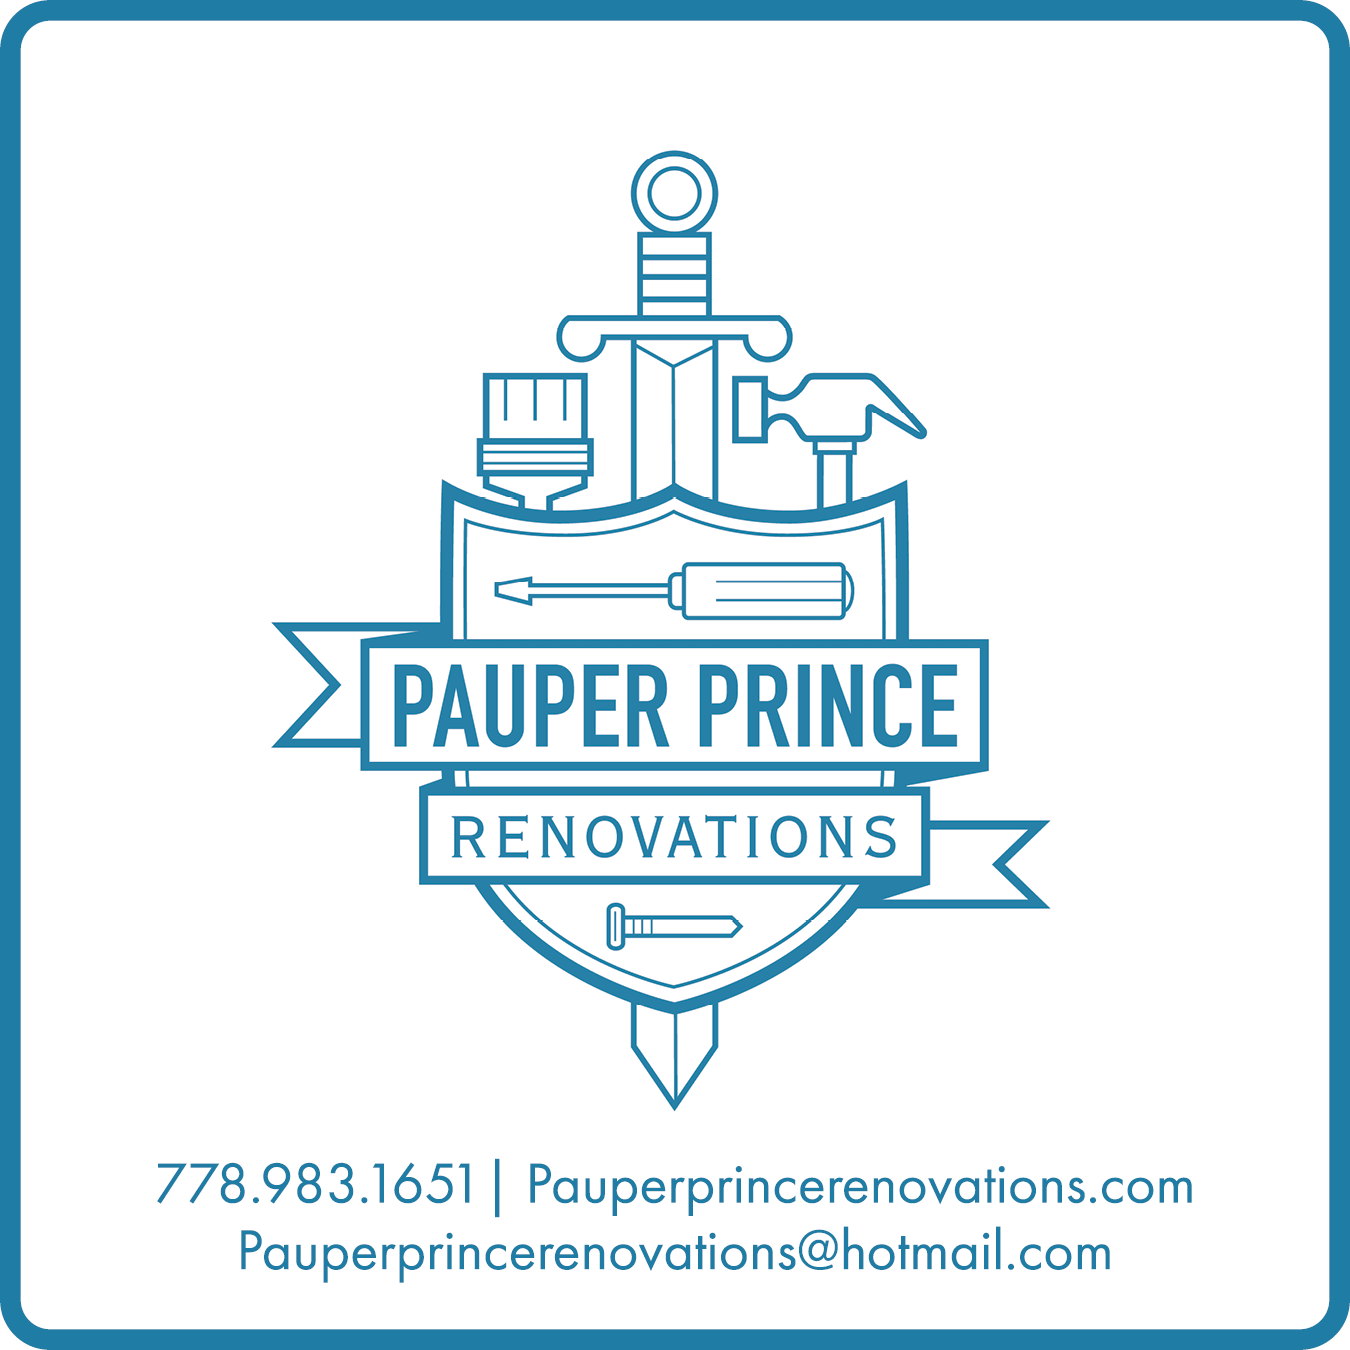 Pauper Prince Renovations